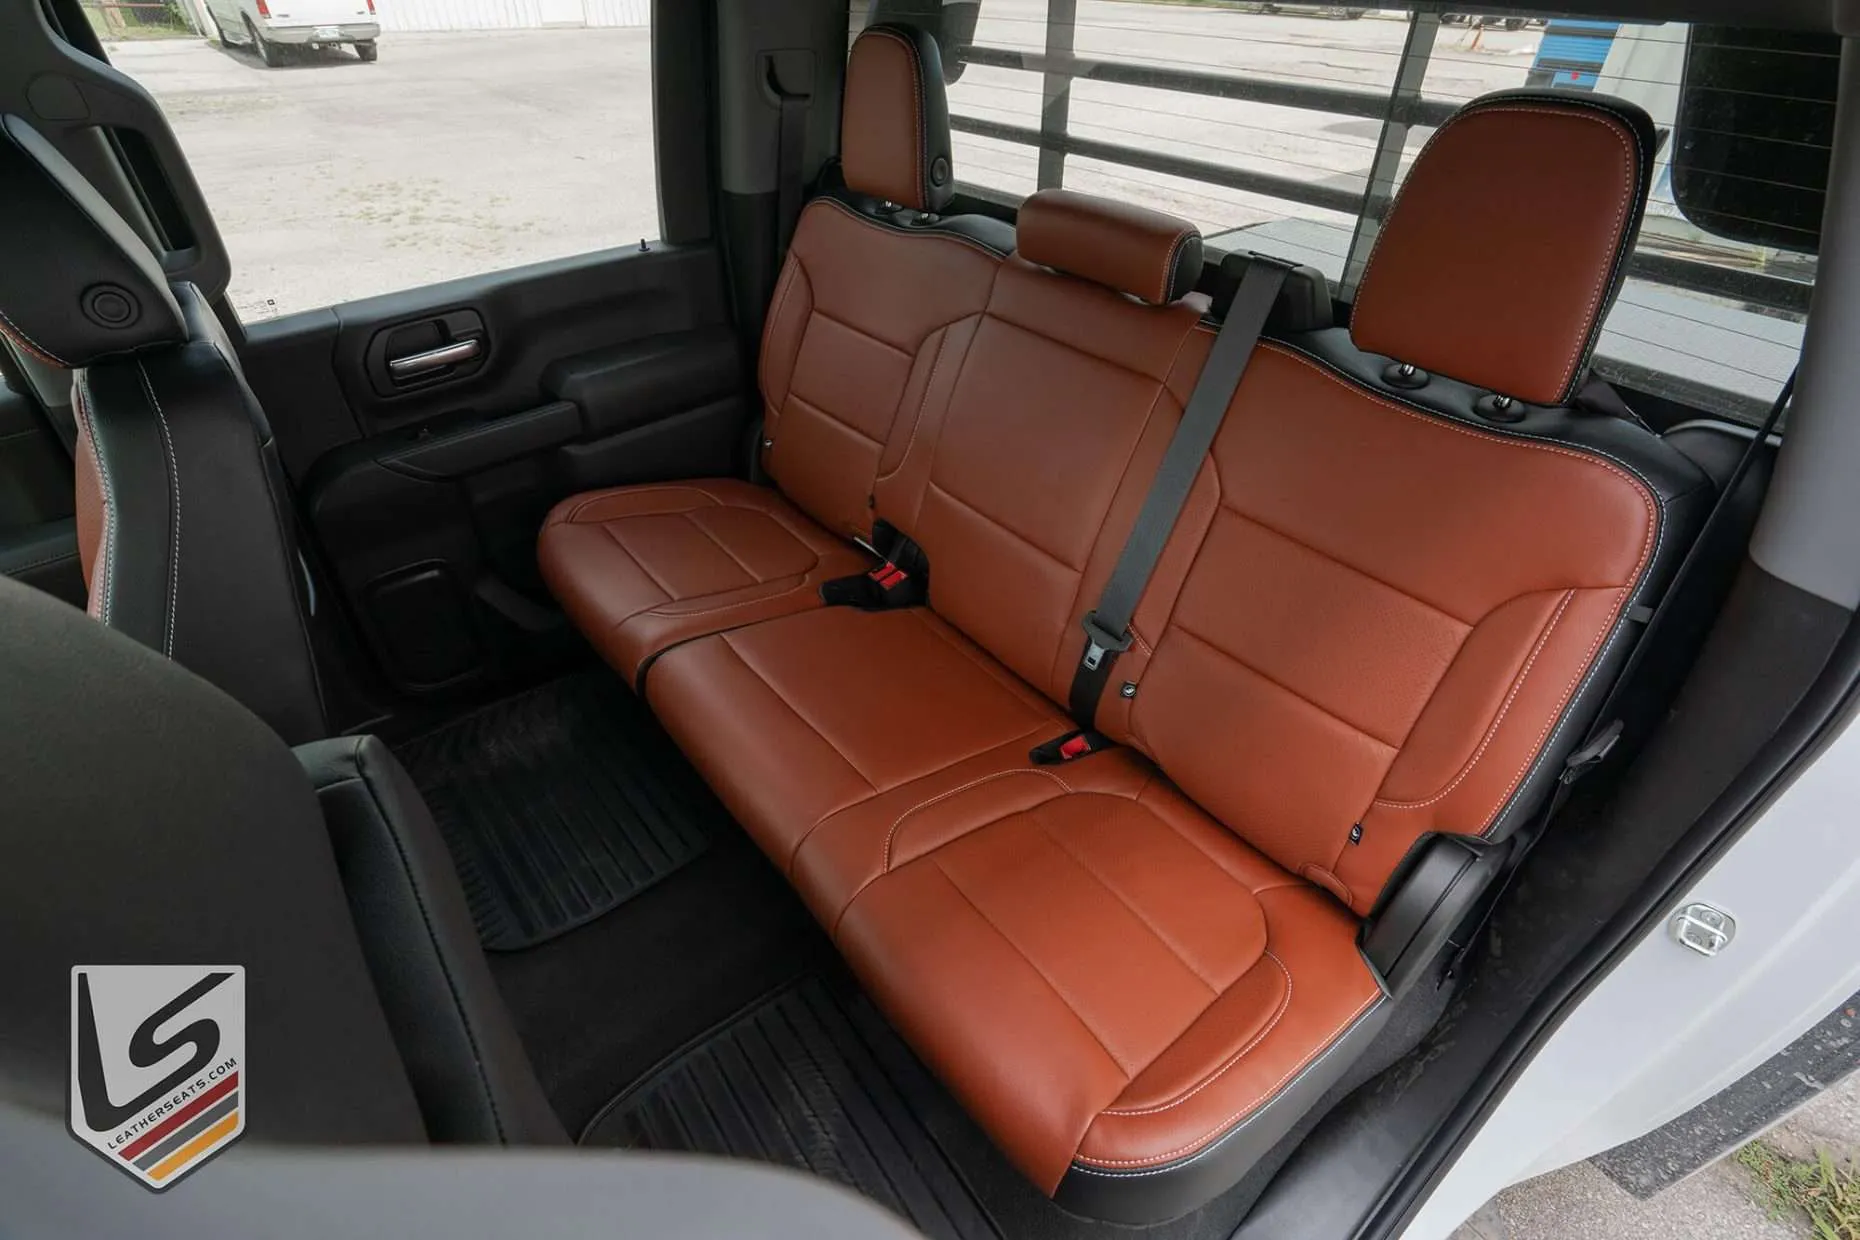 2019-2022 Chevy Silverado rear leather seats in Ecstasy Black and Ecstasy Mitt Brown